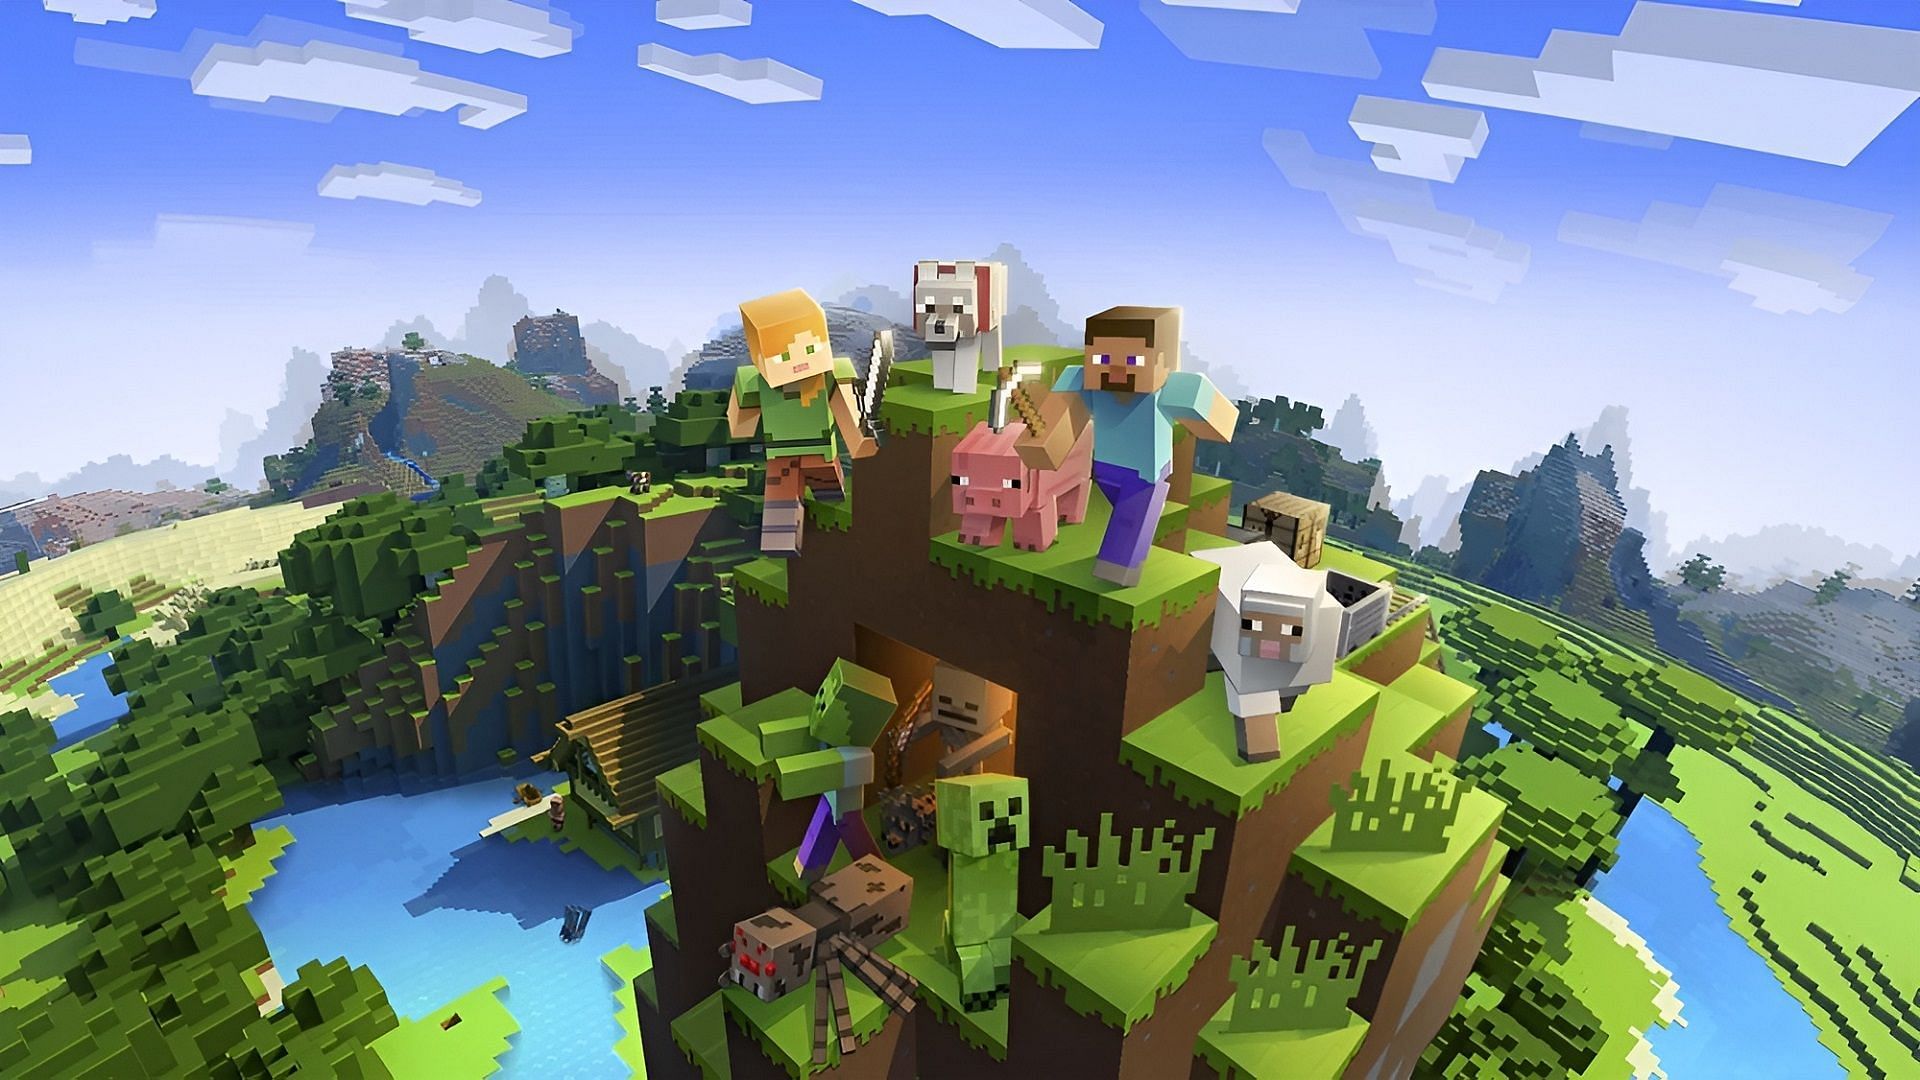 Key art for Minecraft: Bedrock Edition as well as its accompanying platform ports like Windows (Image via Mojang)